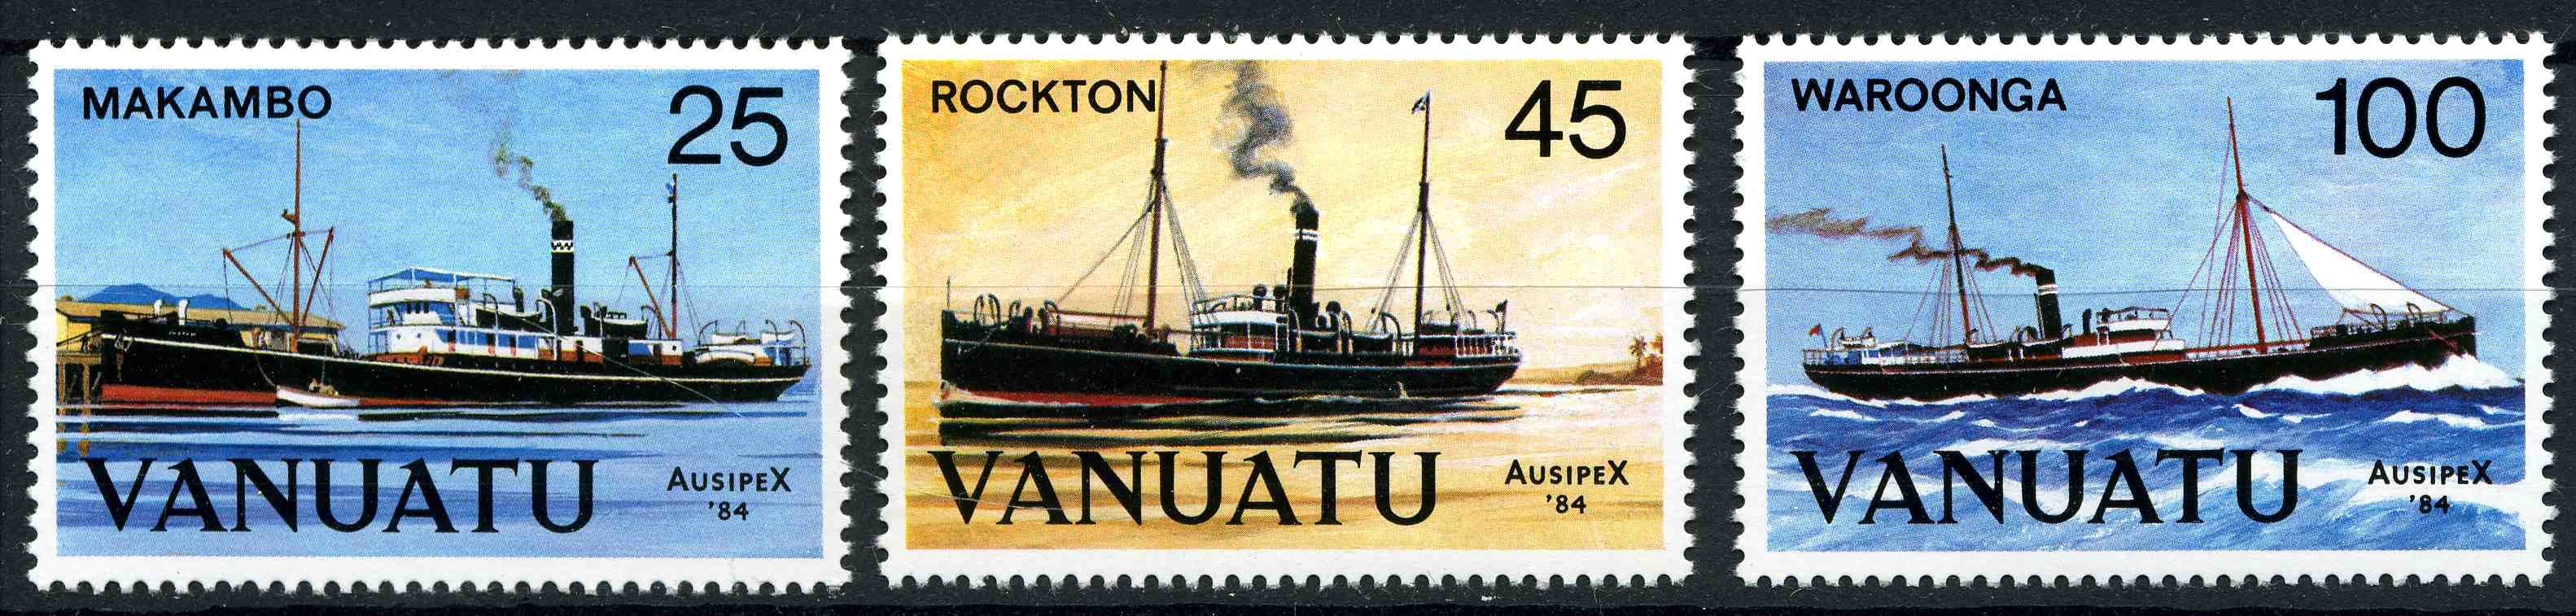 Vanuatu 1984 Ausipex 84 Exposition philatélique internationale de Melbourne